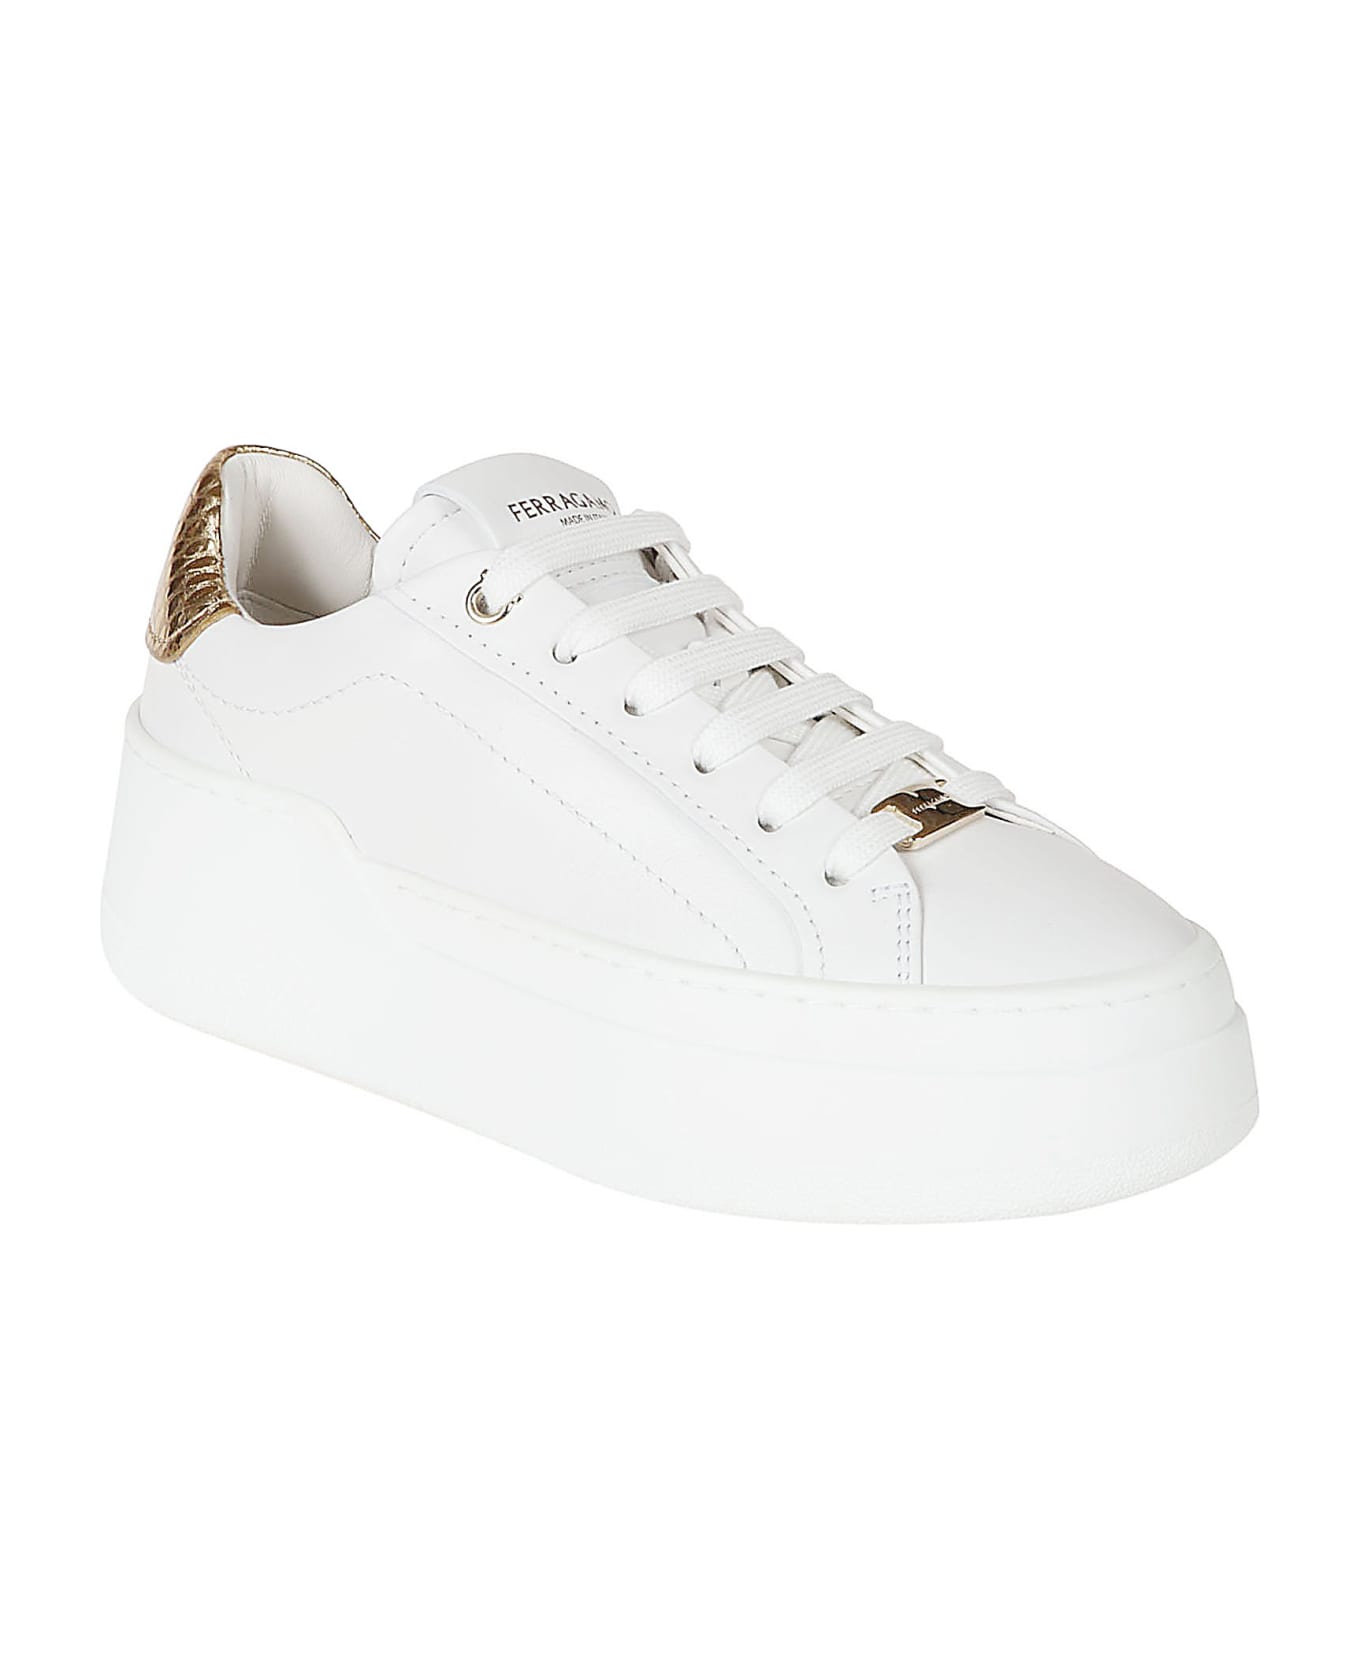 Ferragamo Dahlia 1 Sneakers - White/Gold ウェッジシューズ